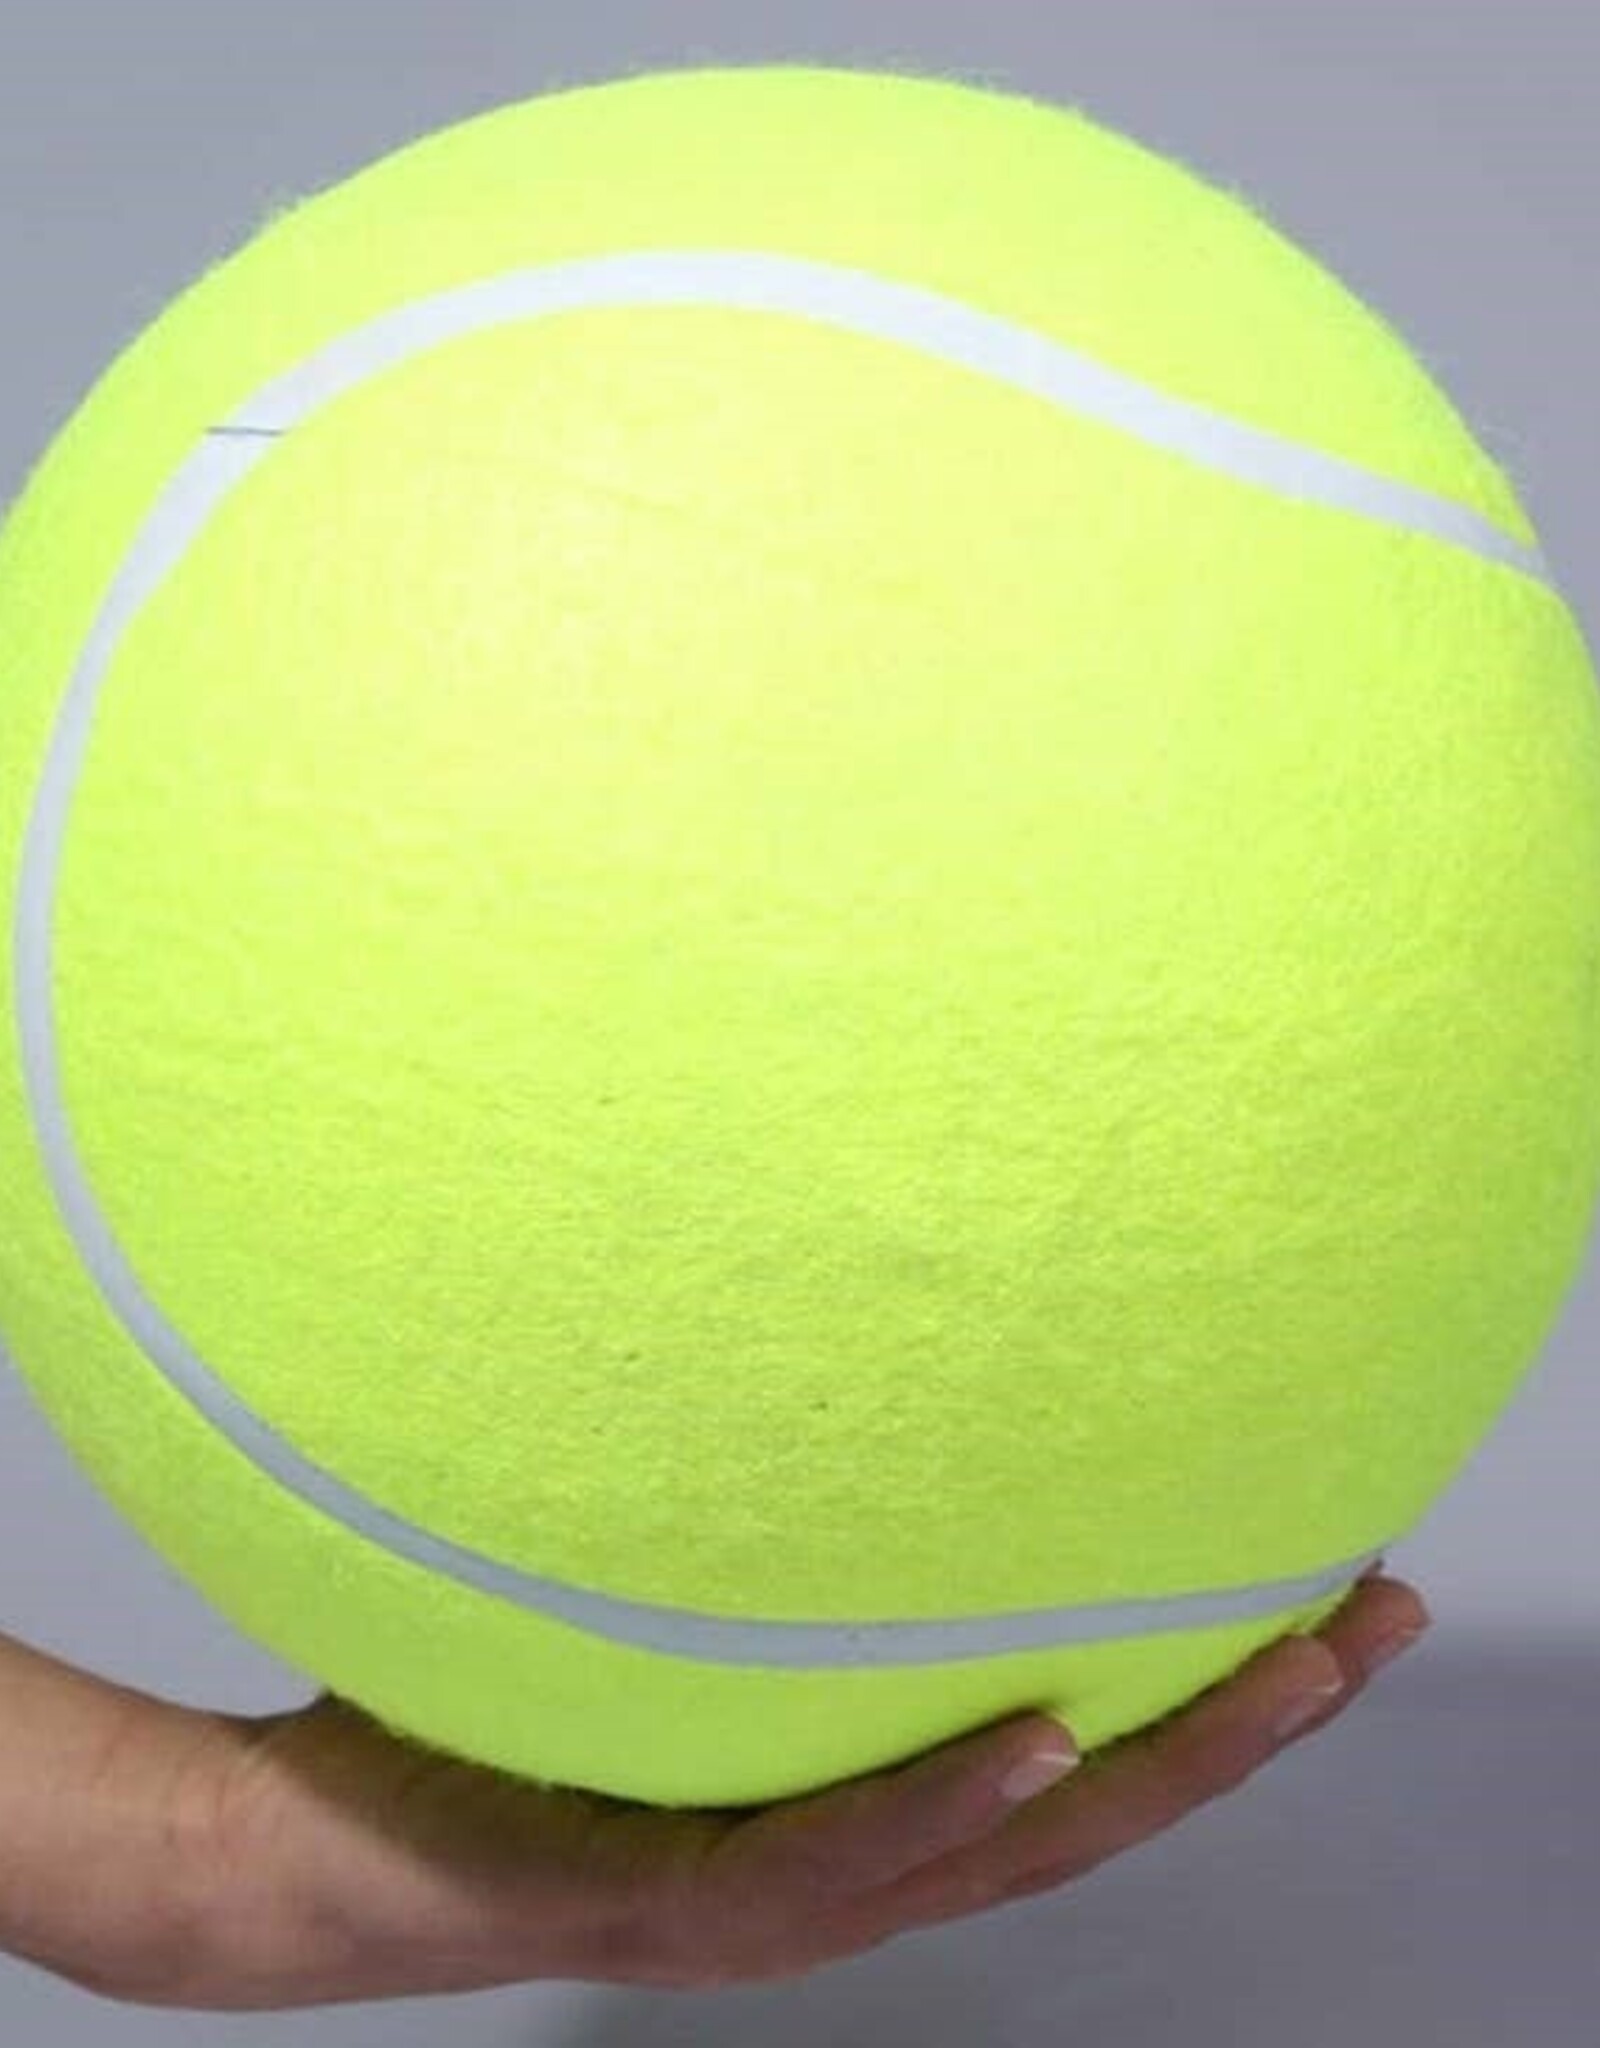 Too Big to Chew Giant Tennis Ball